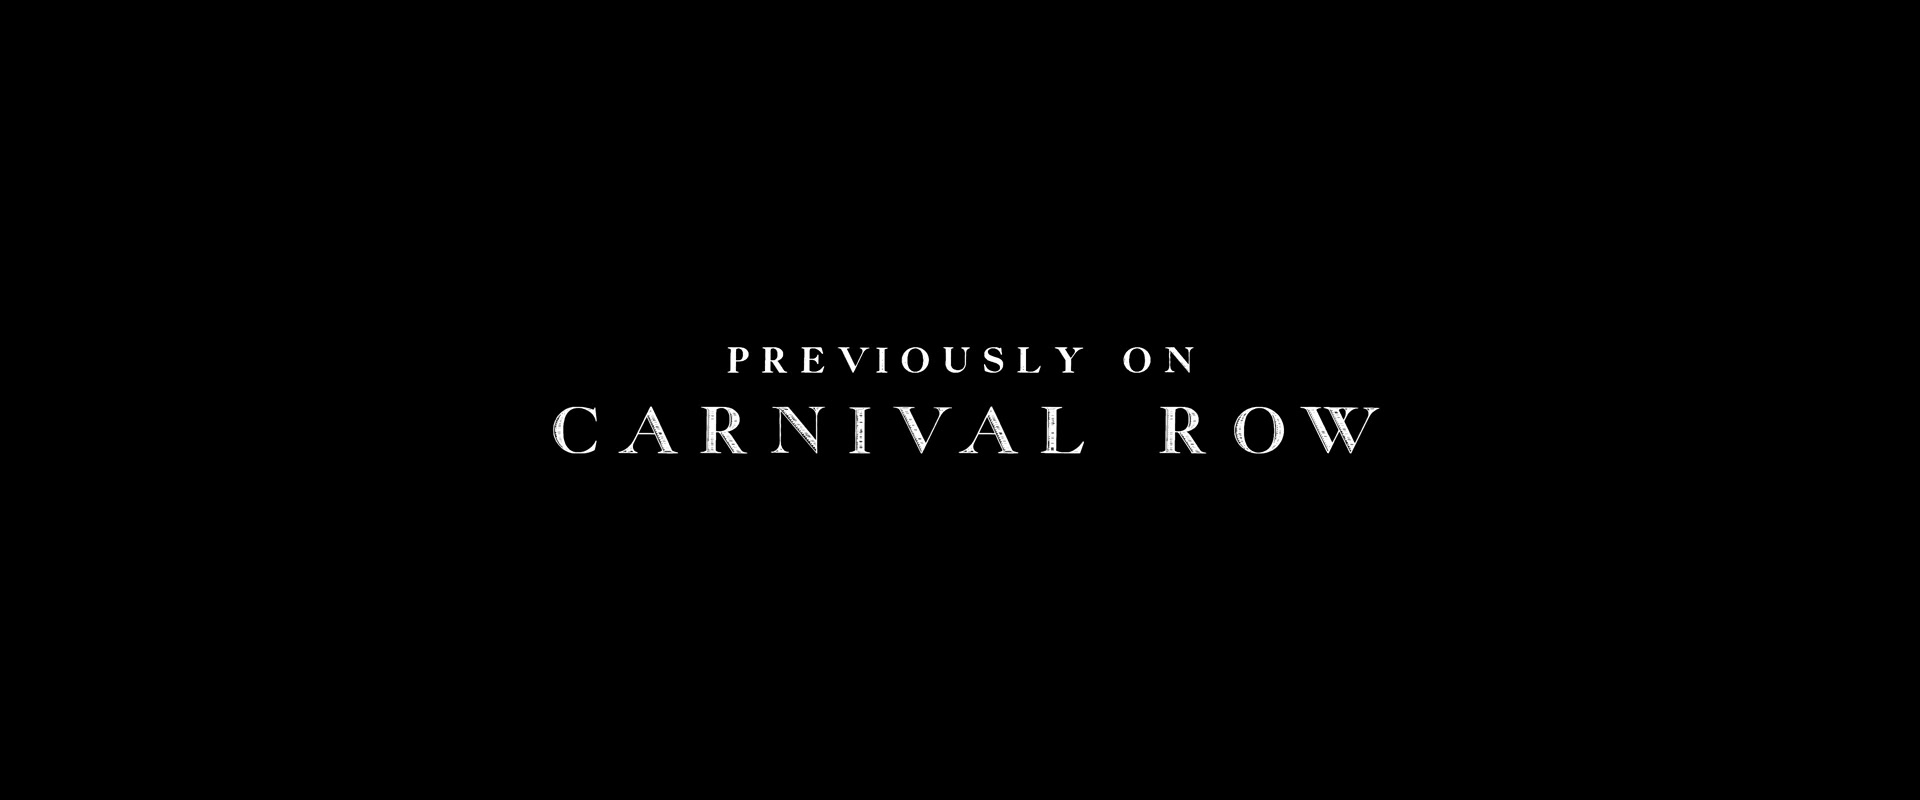 [ cap-that.com ] Carnival Row 201 Fight or Flight > screencap archive